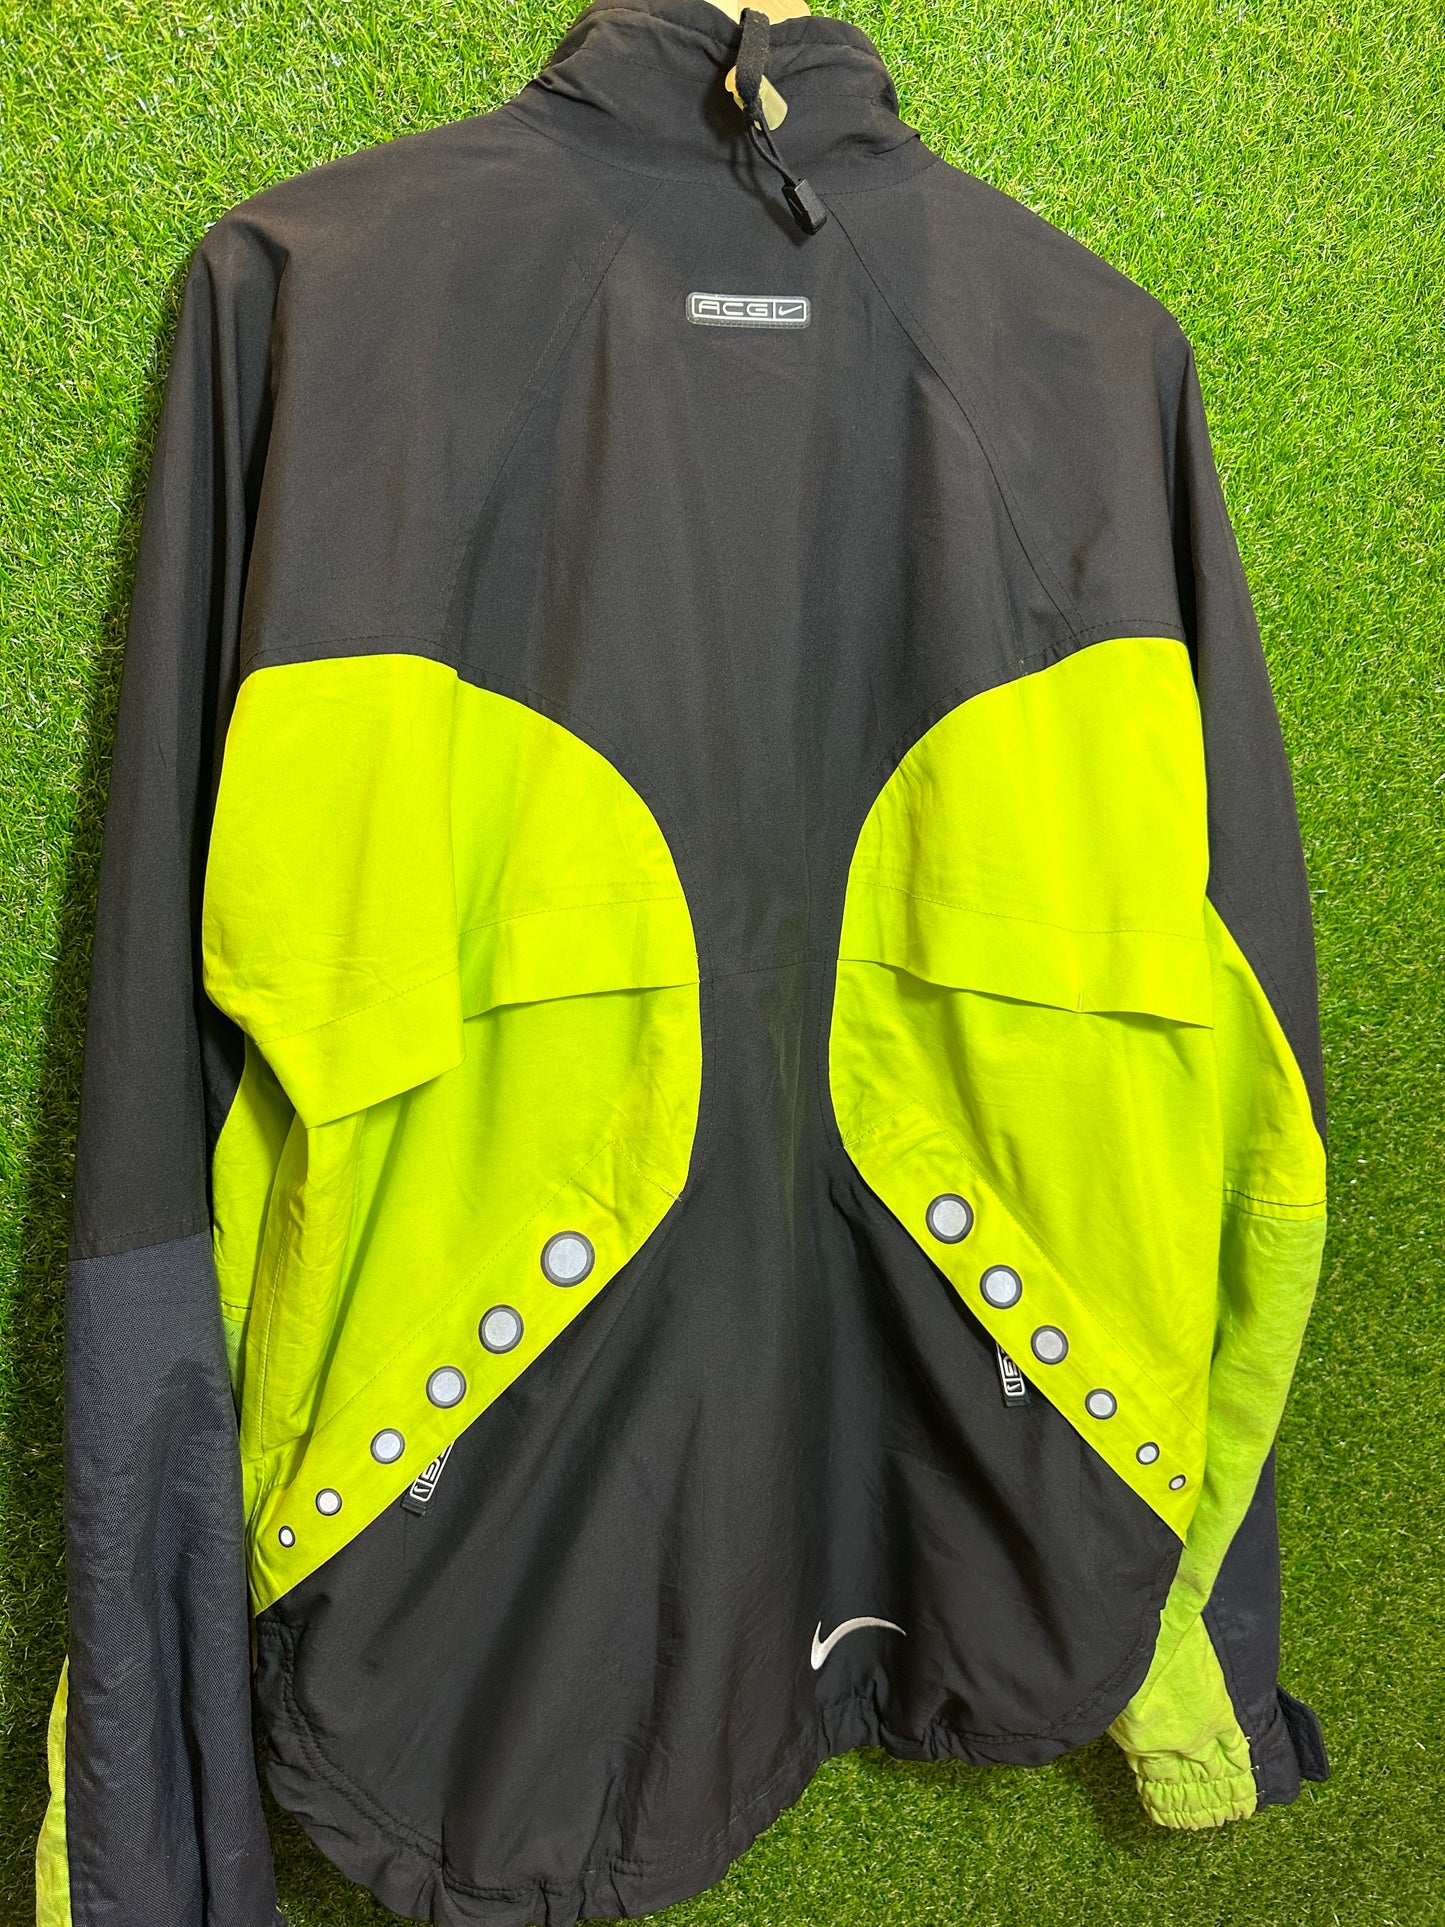 Vintage Sz M Nike ACG Black/Neon 3M Jacket